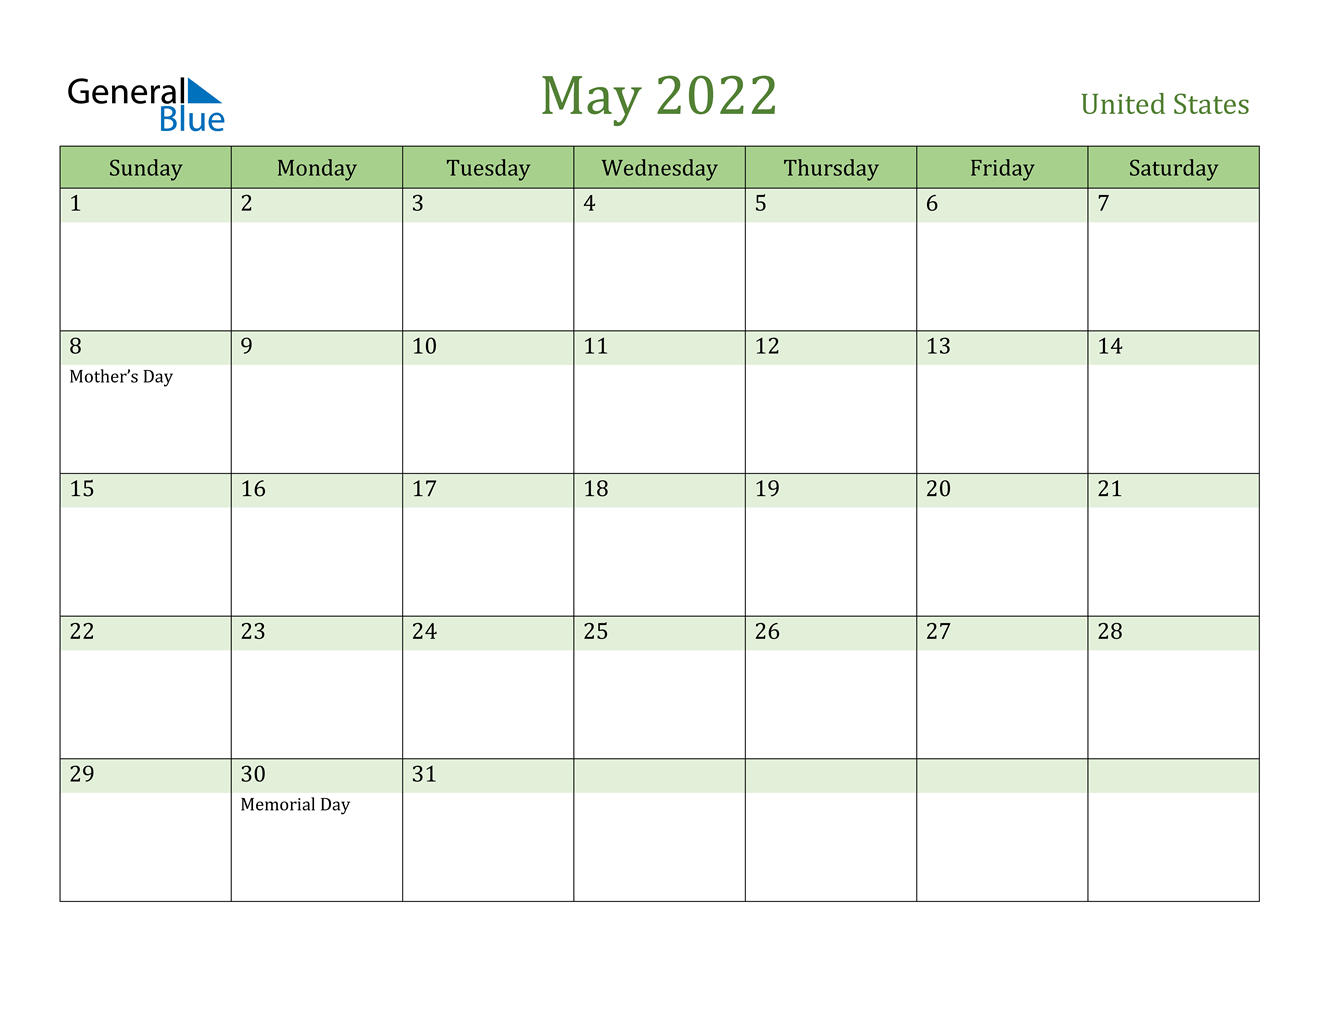 May 2022 Calendar - United States